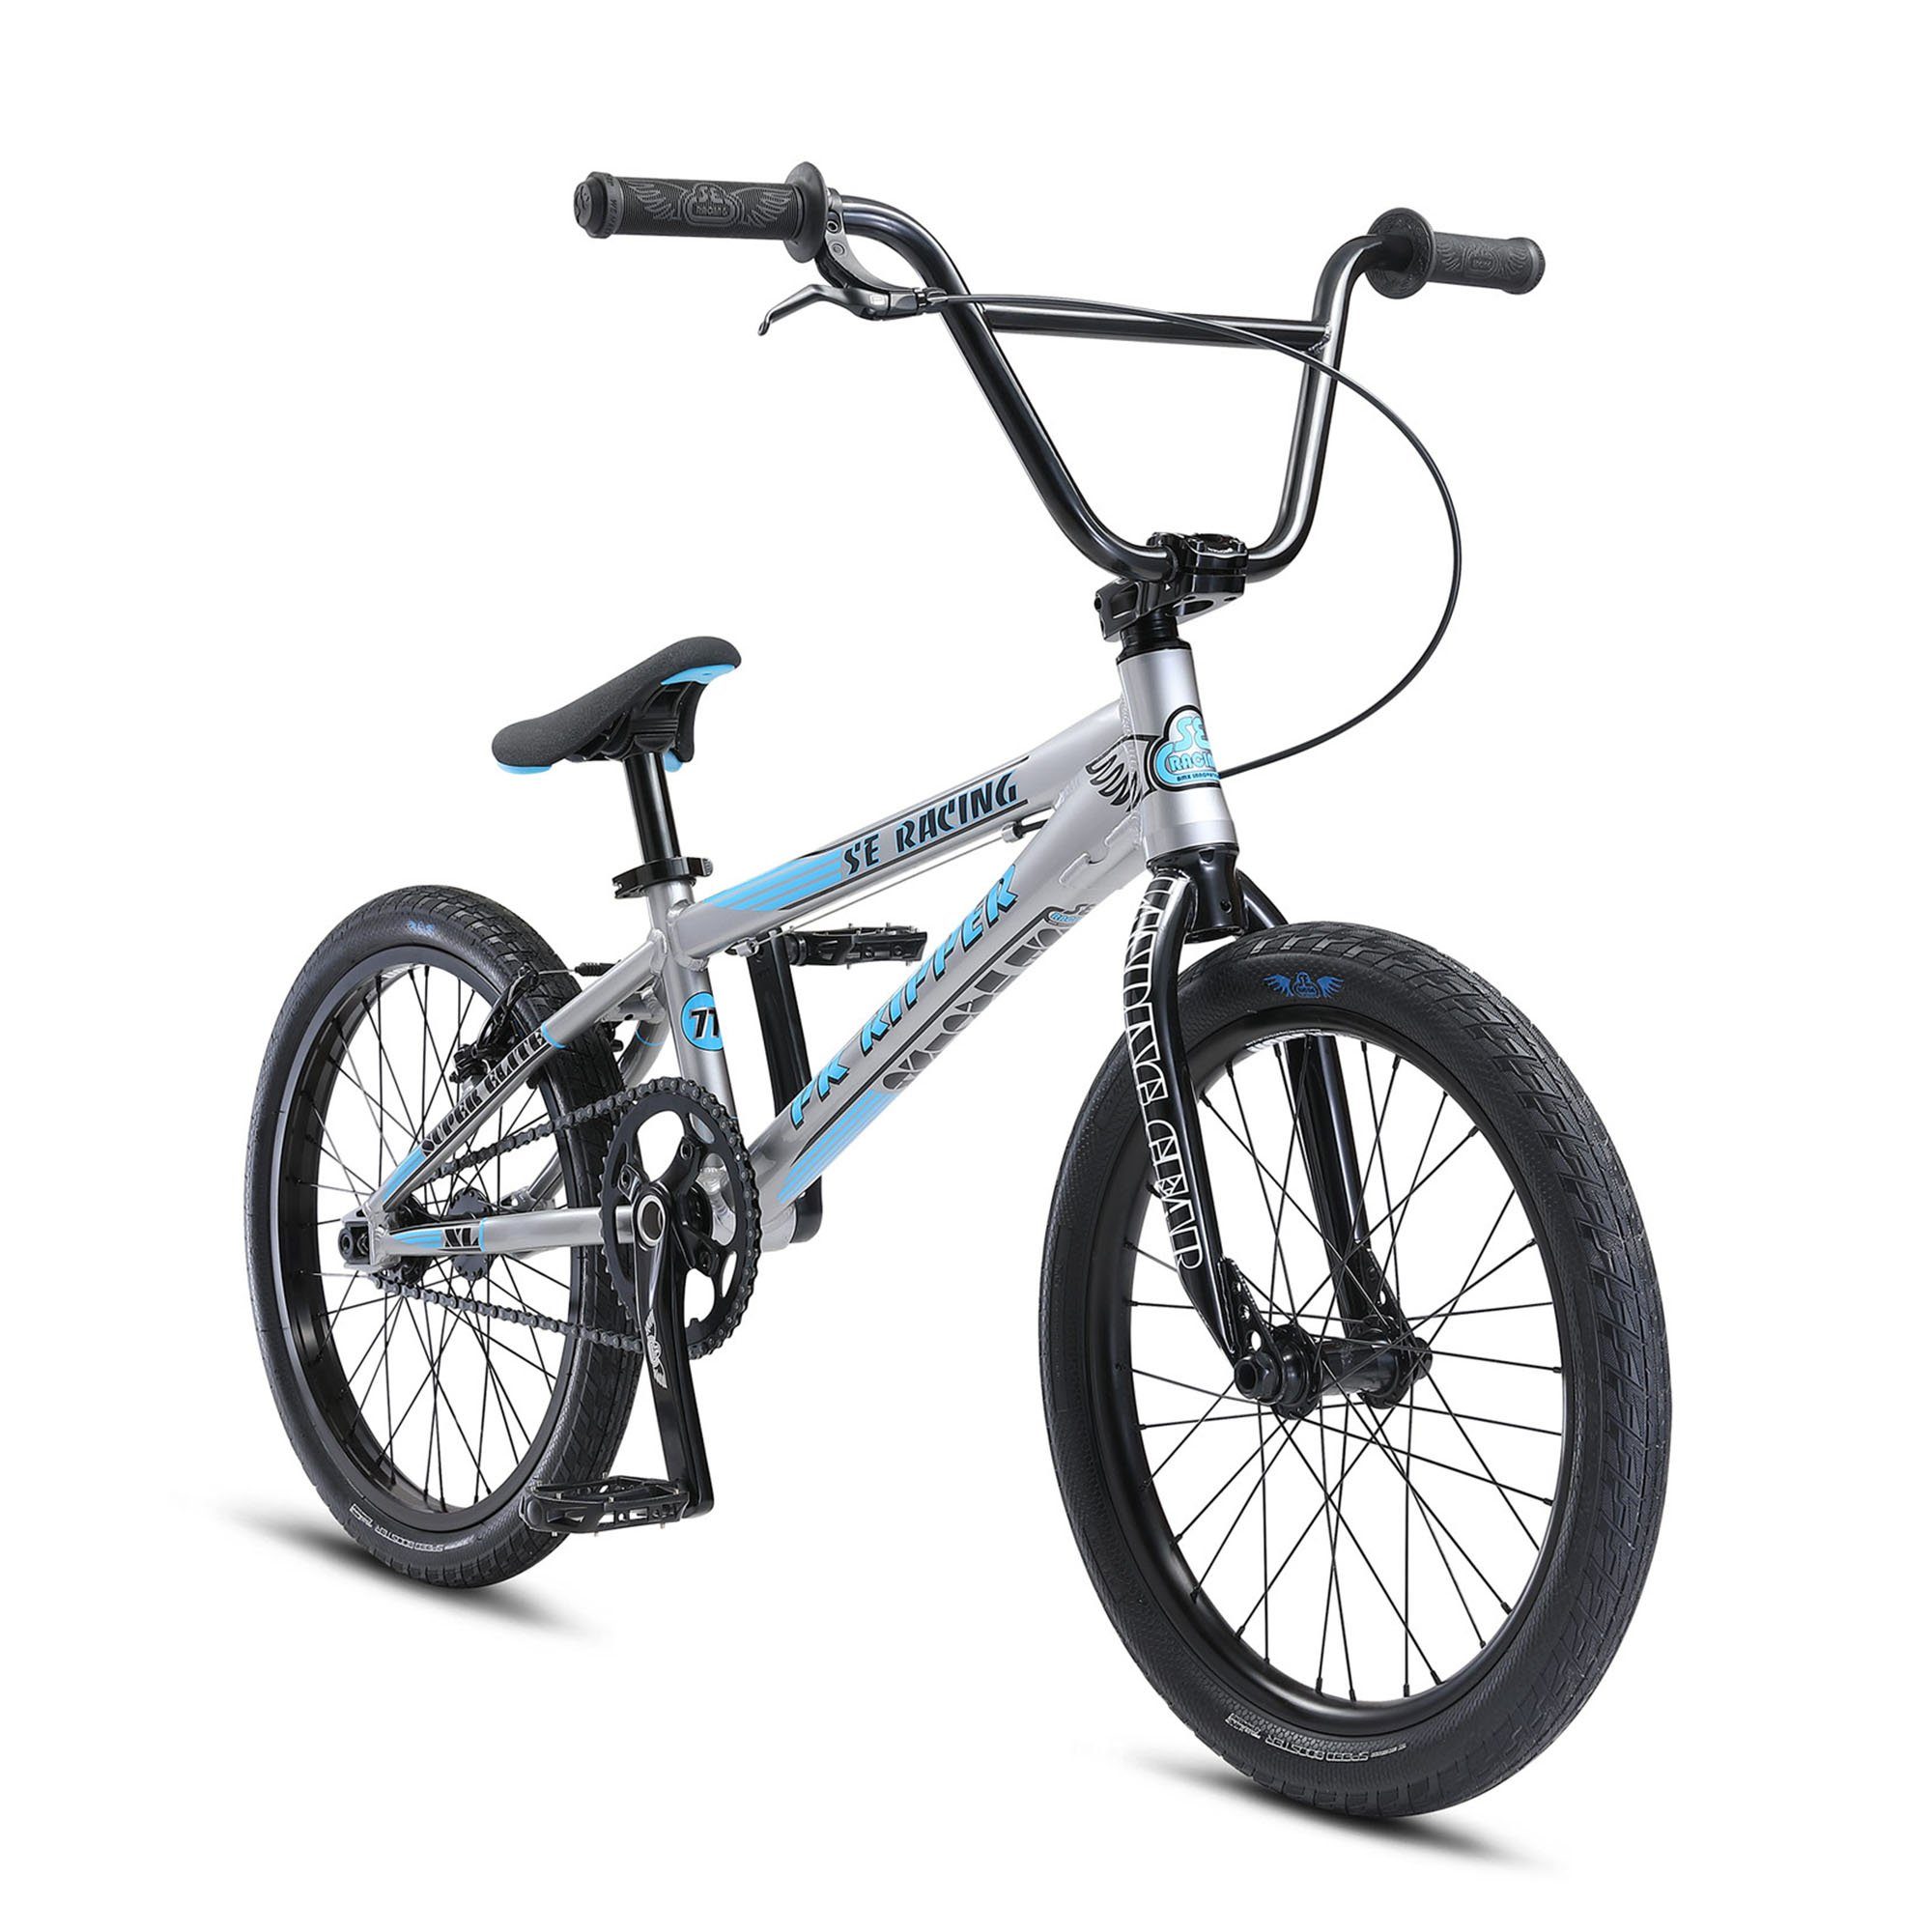 SE Bikes BMX-Rad PK Ripper Super Elite XL, 1 Gang, ohne Schaltung, BMX Bike Fahrrad BMX Rad Stunt Old School Dirt 20"